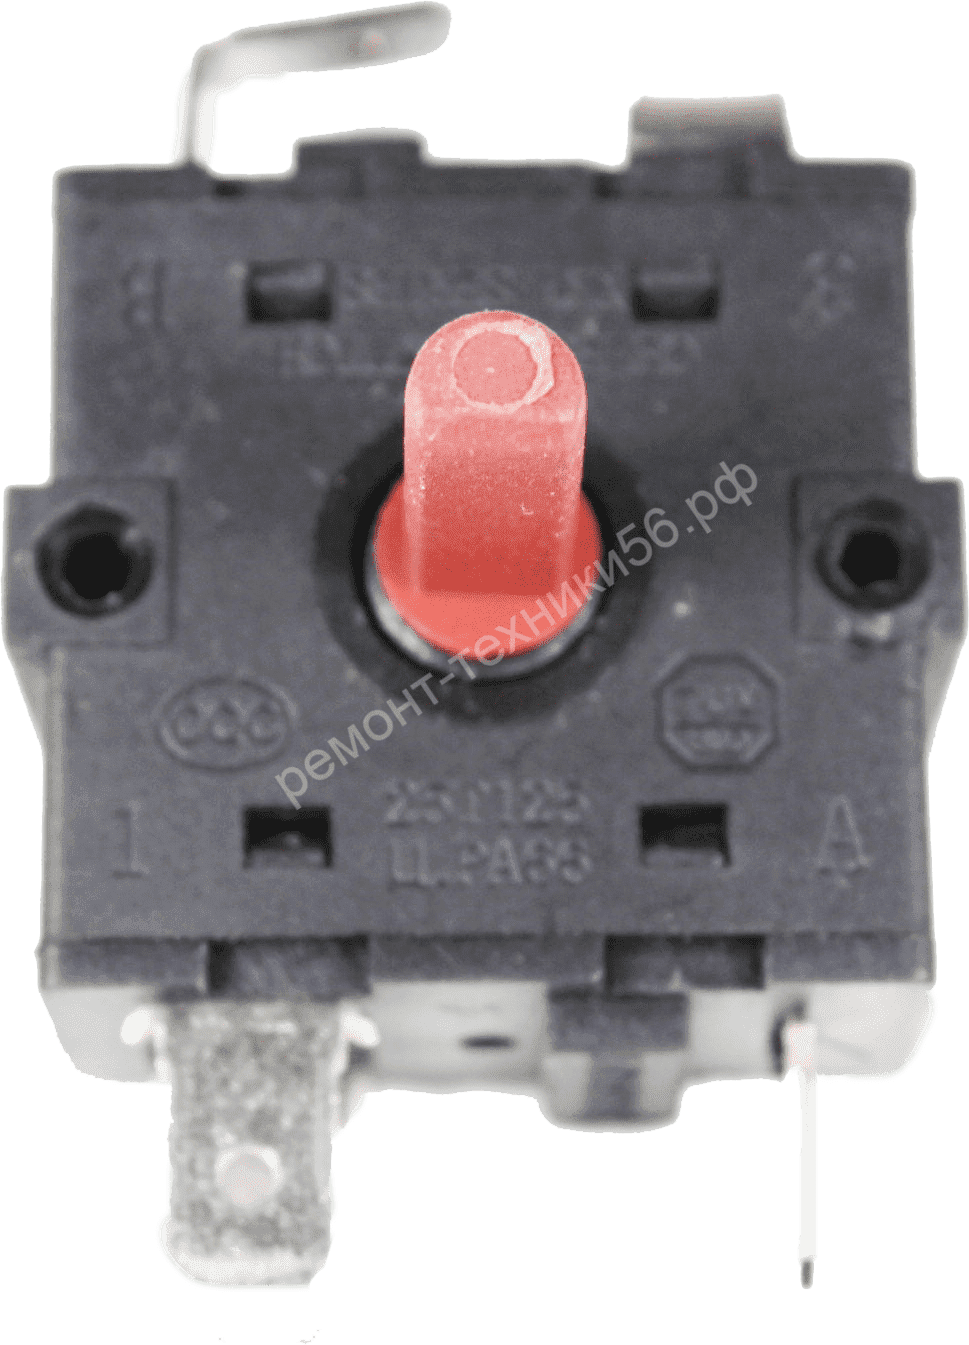 Переключатель Rotary Switch XK1-233,2-1 Thermobile ER 2.8 - широкий ассортимент фото3